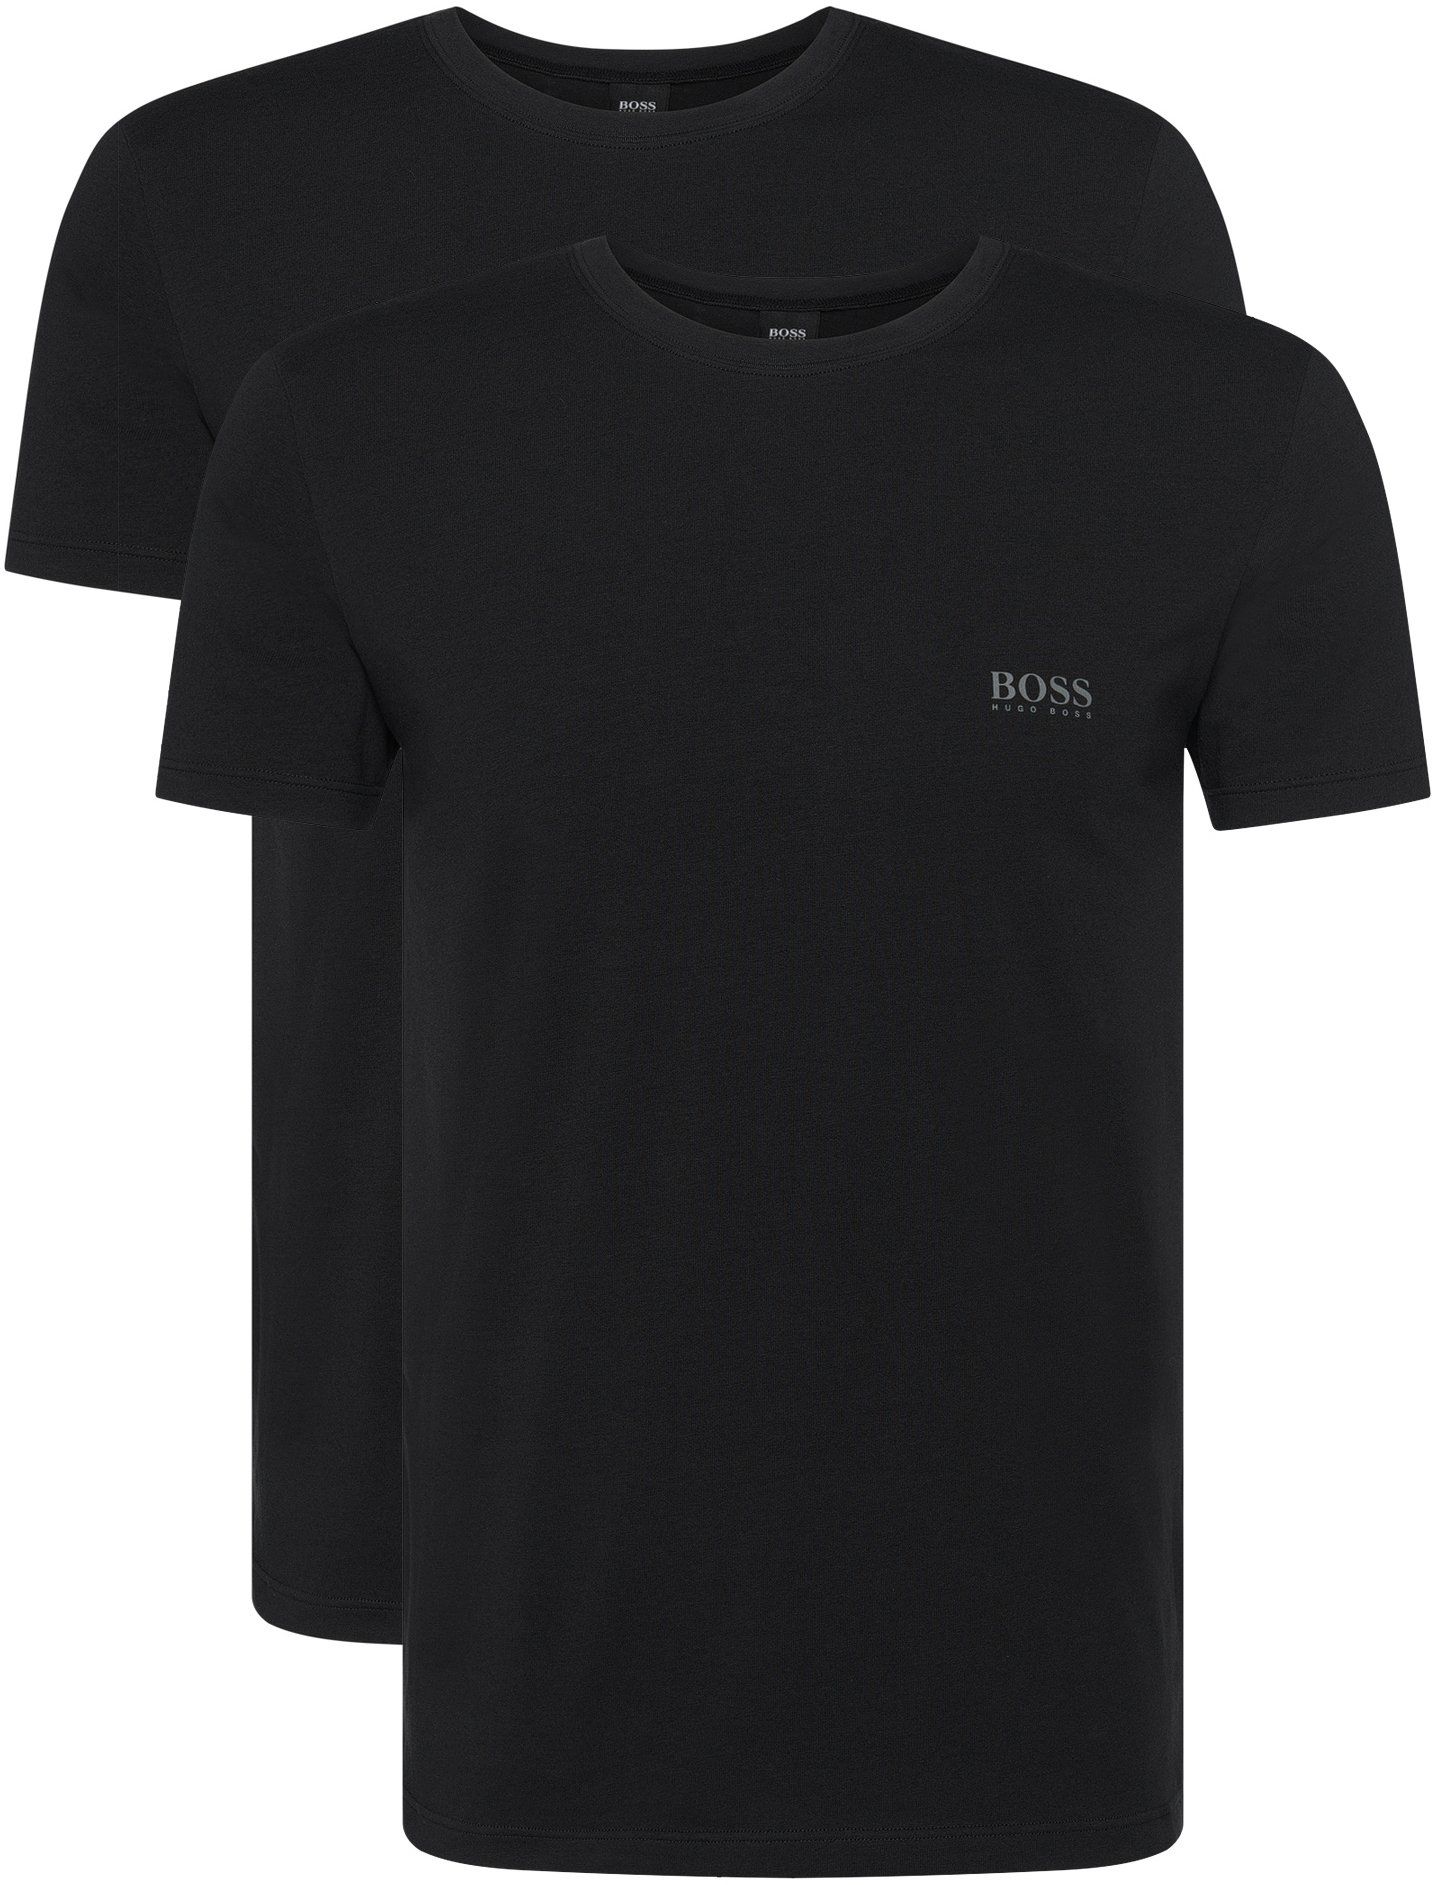 Hugo Boss T Shirt Regular Fit 2-Pack Black size M